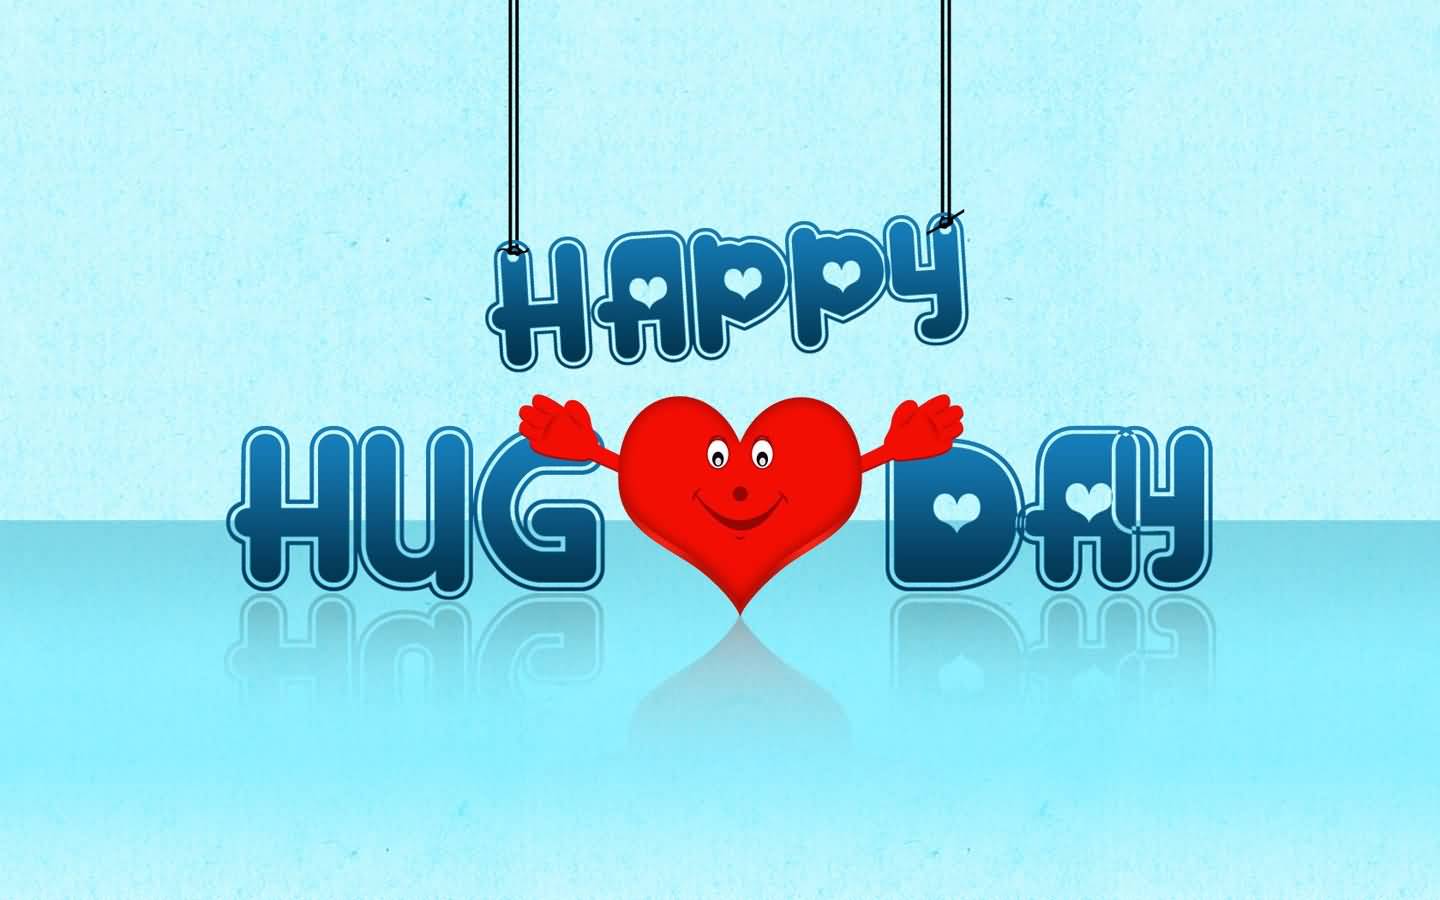 Happy Hug Day Wallpaper